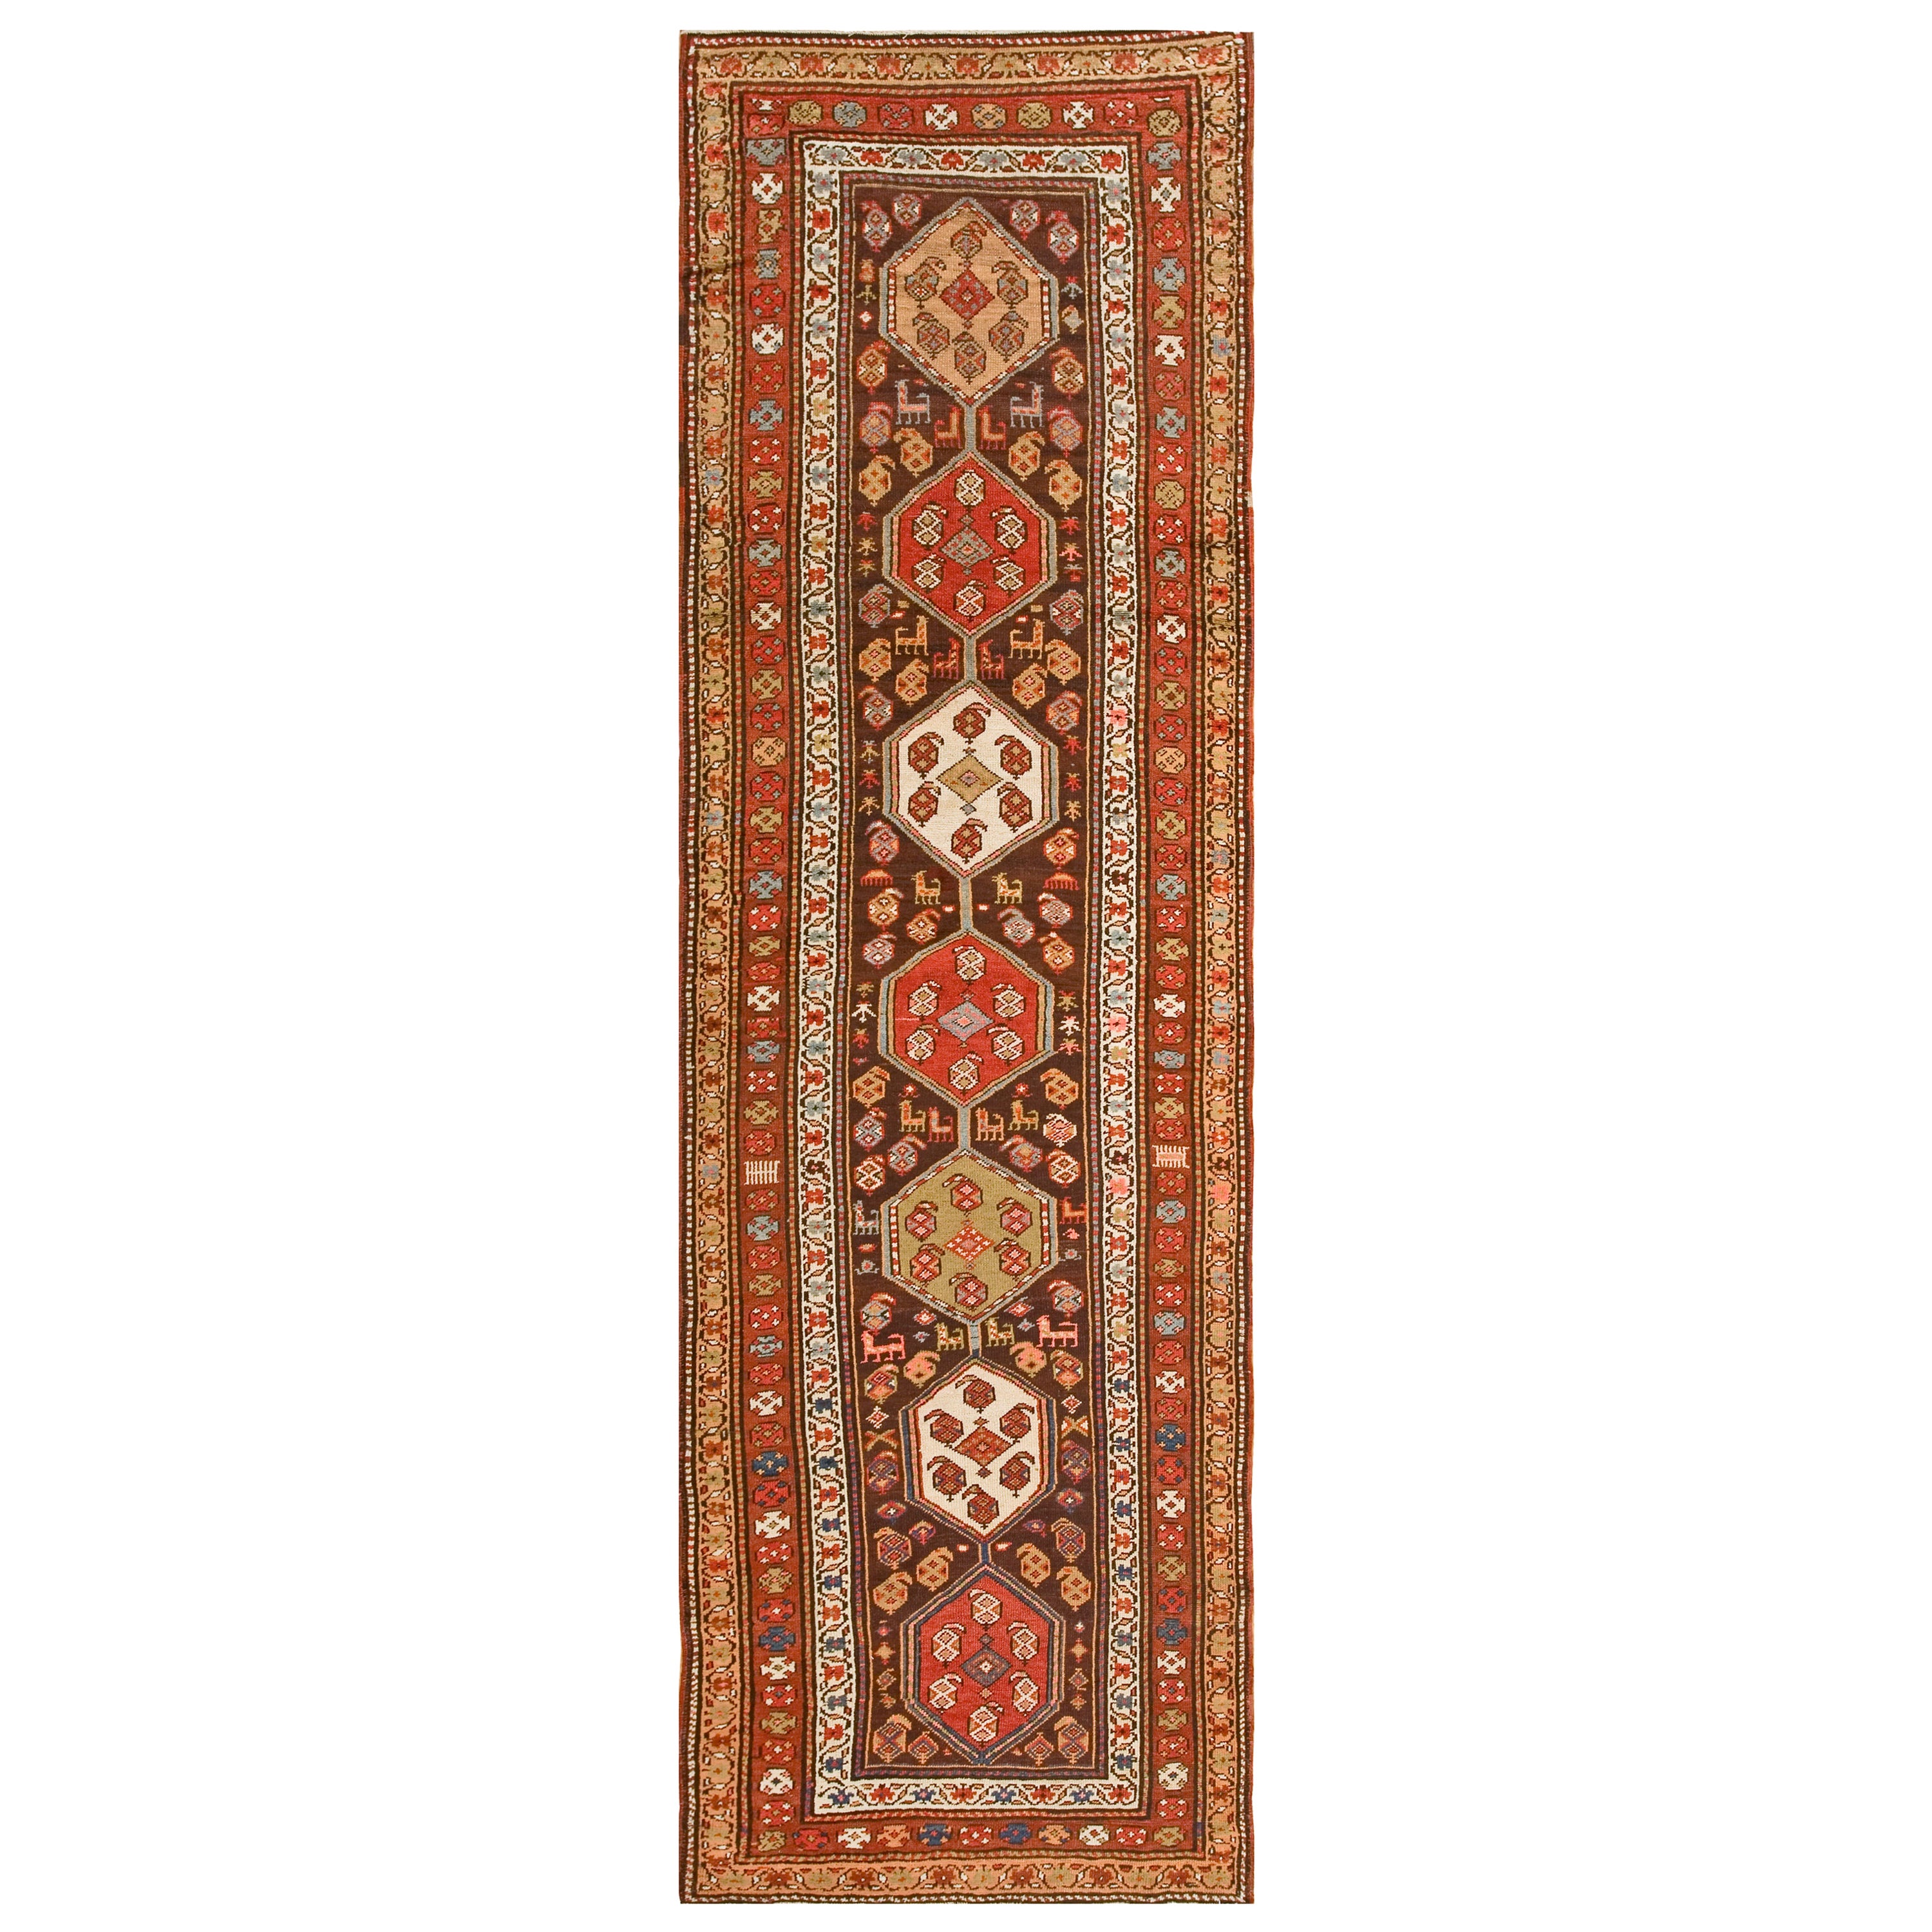 Early 20th Century W. Persian Kurdish Runner Carpet (3'10" x 13'2" - 117 x 401)